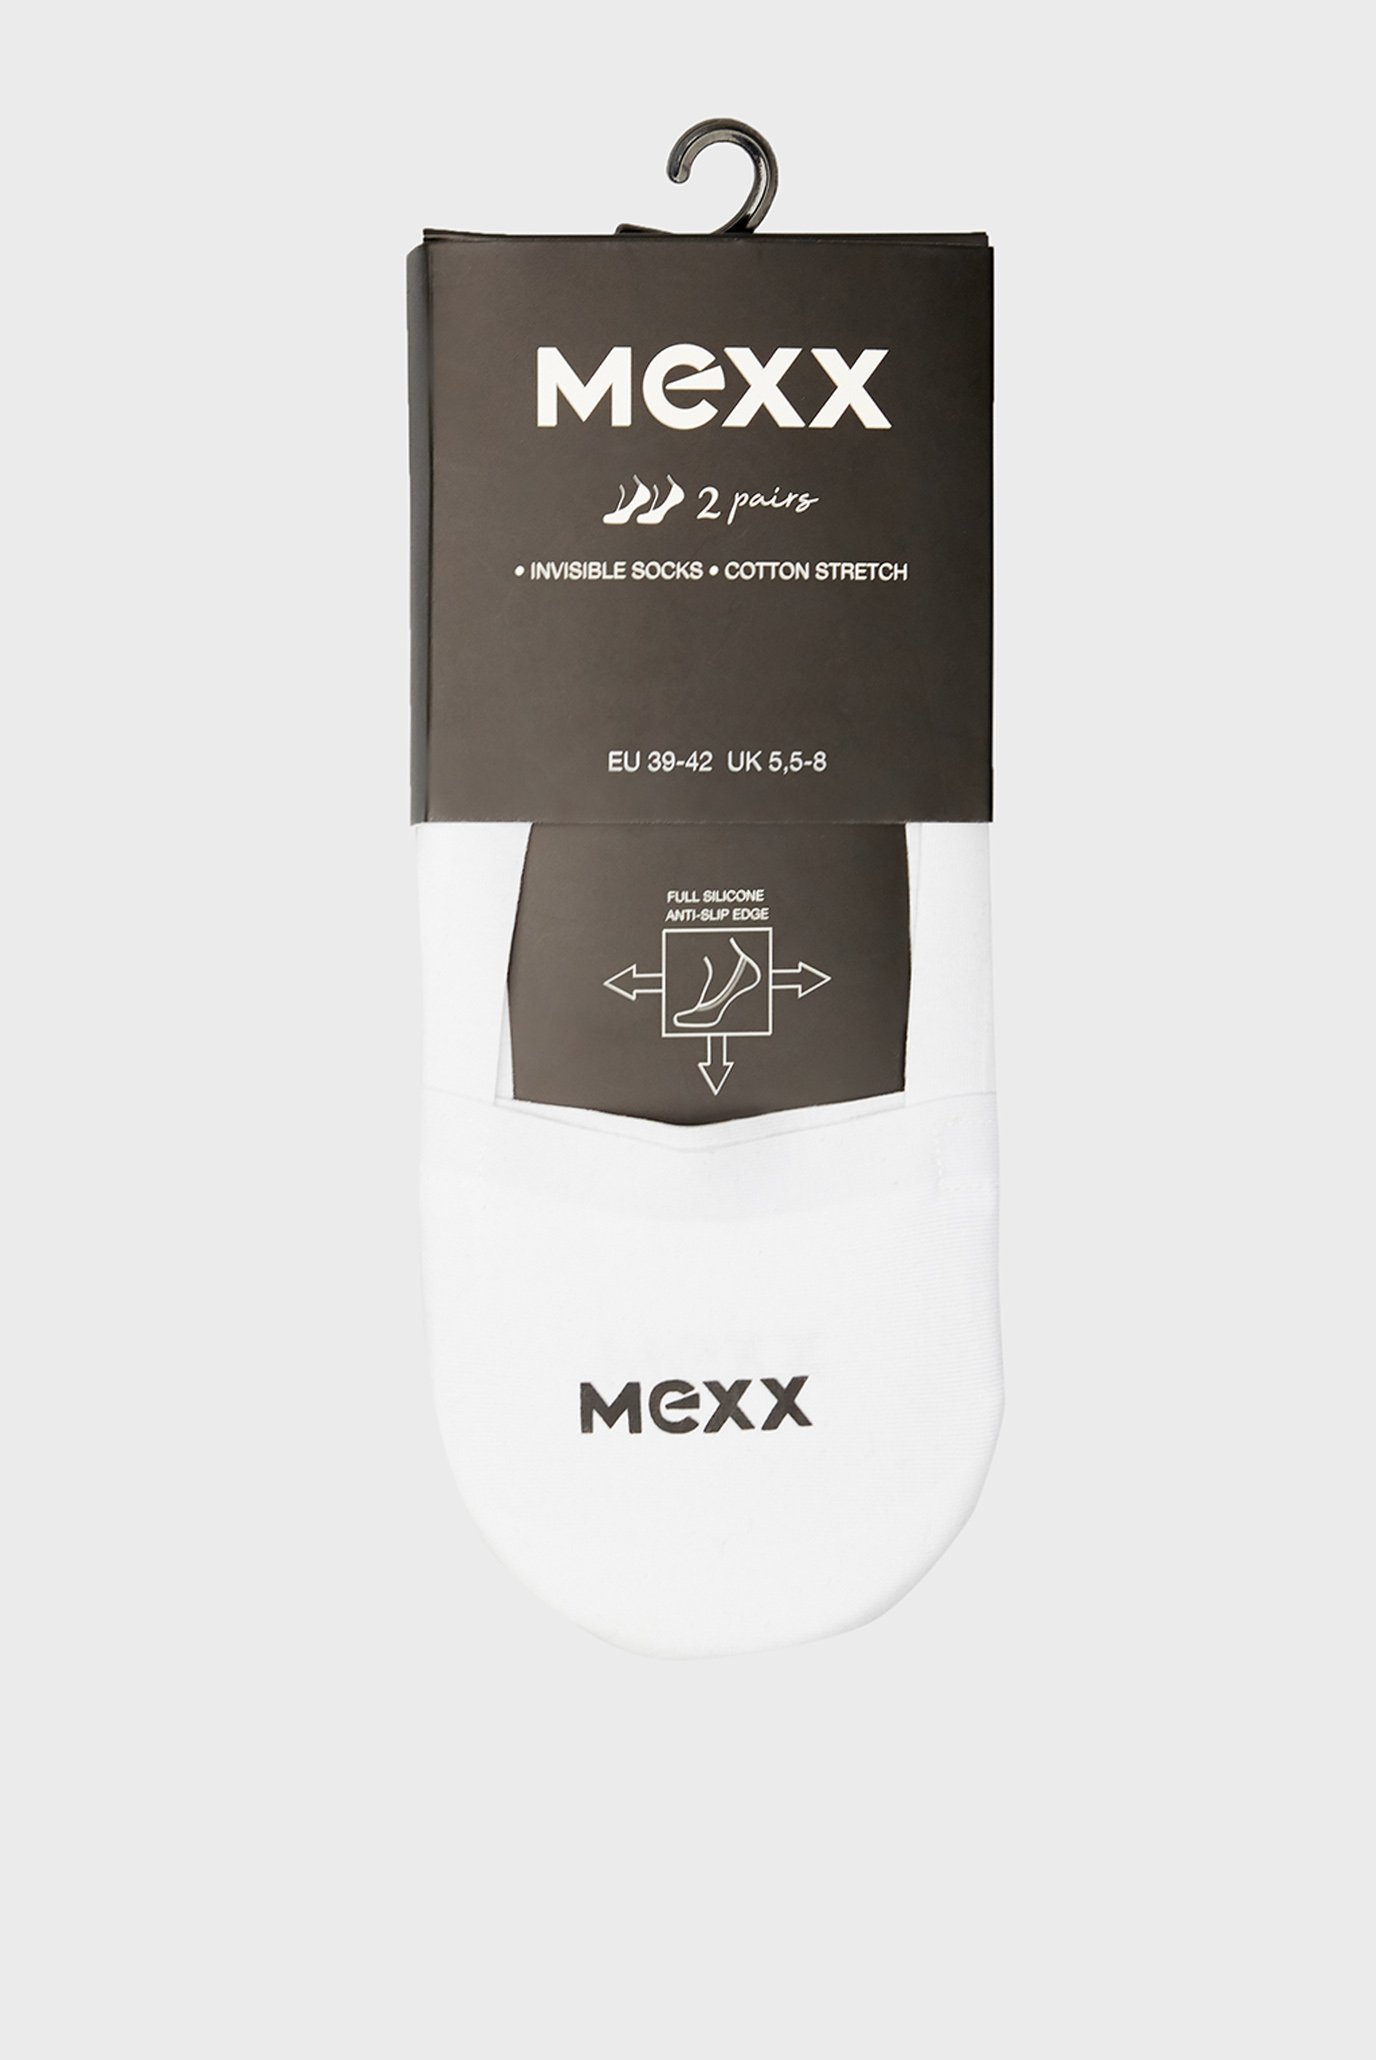 Белые следы (2 пары) MEXX Invisible Socks 1